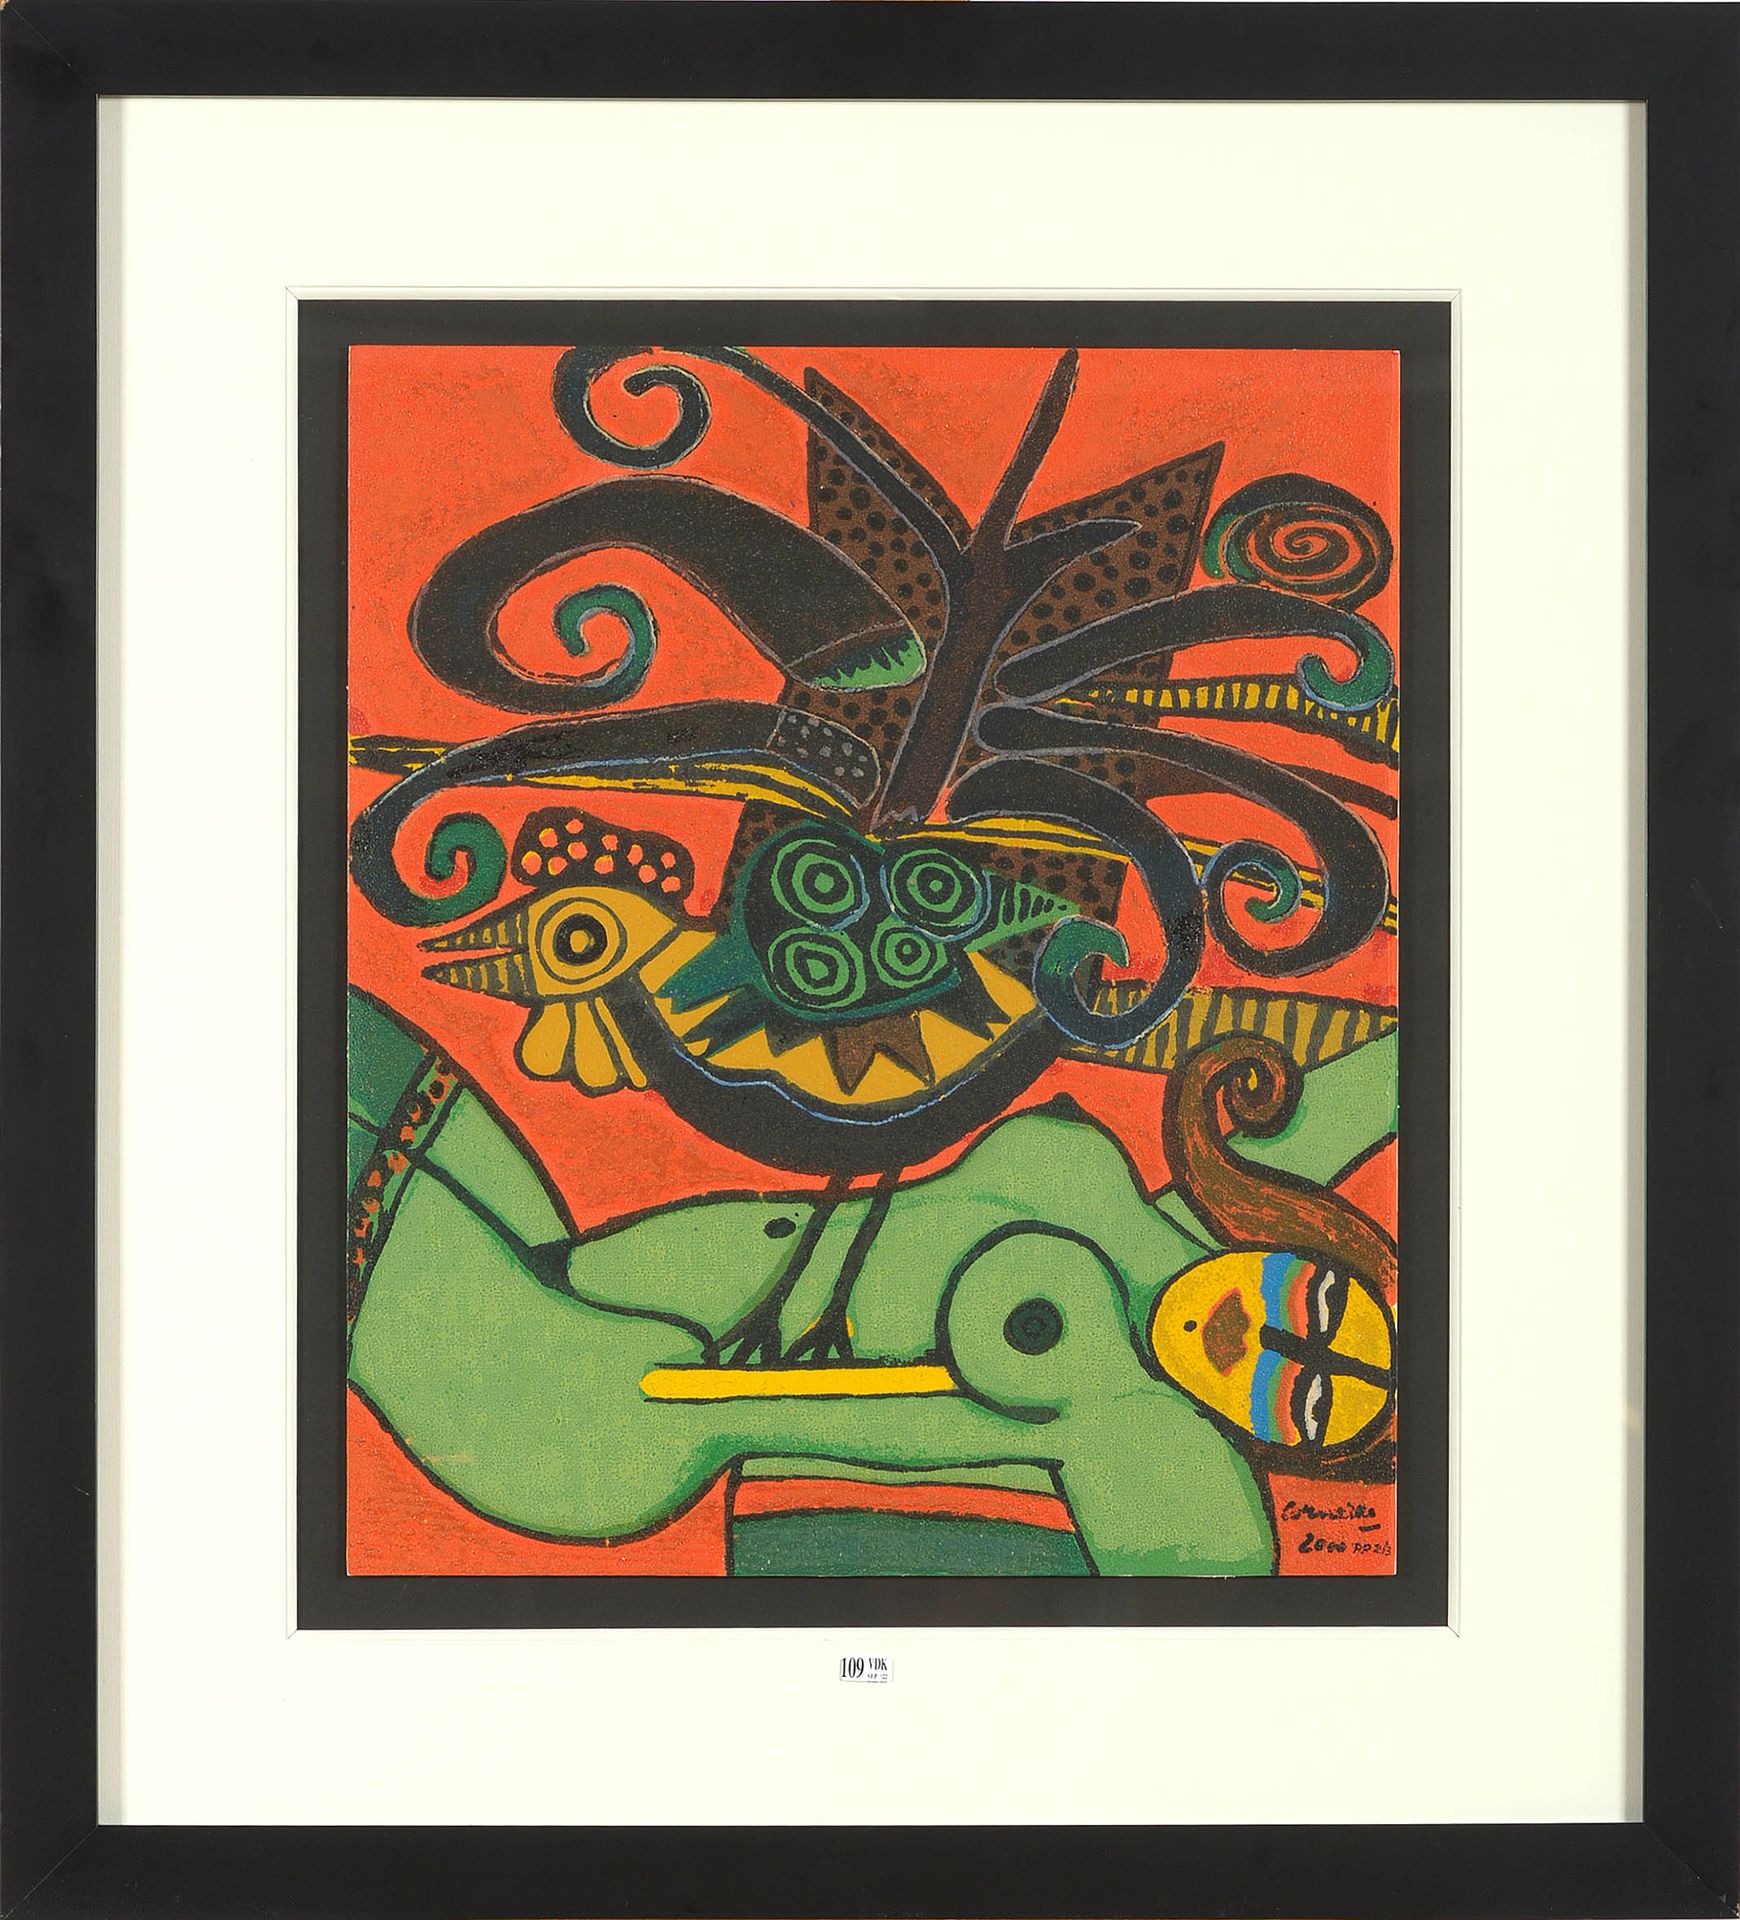 CORNEILLE (1922 - 2010) "女性裸体和公鸡 "纸上彩色石板画（?）。右下角署名 "Cornelius"，日期为2000年。编号为2/3。比&hellip;